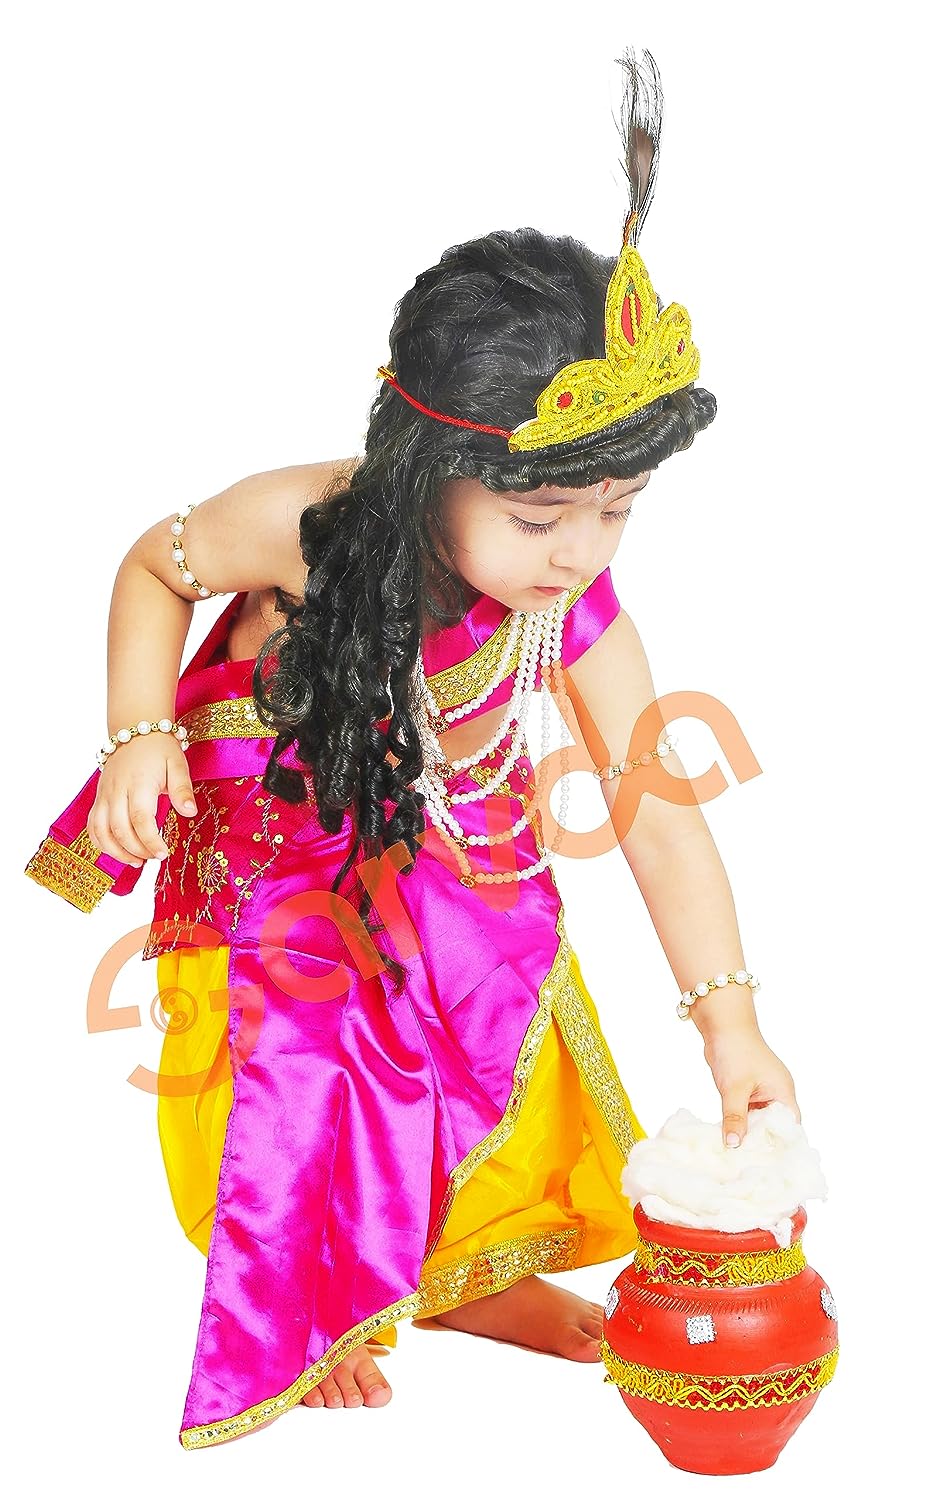 Buy Sarvda Krishna Dress for Kids | Shri Krishna Dress for Baby Boy |  Janmashtami kanha constume for boy and Girl Age 3 Months 6 Months, 1 2 3 4  5 6 7 8 Years (6-8 Years, Radha Rani Dress (Carat)) at Amazon.in